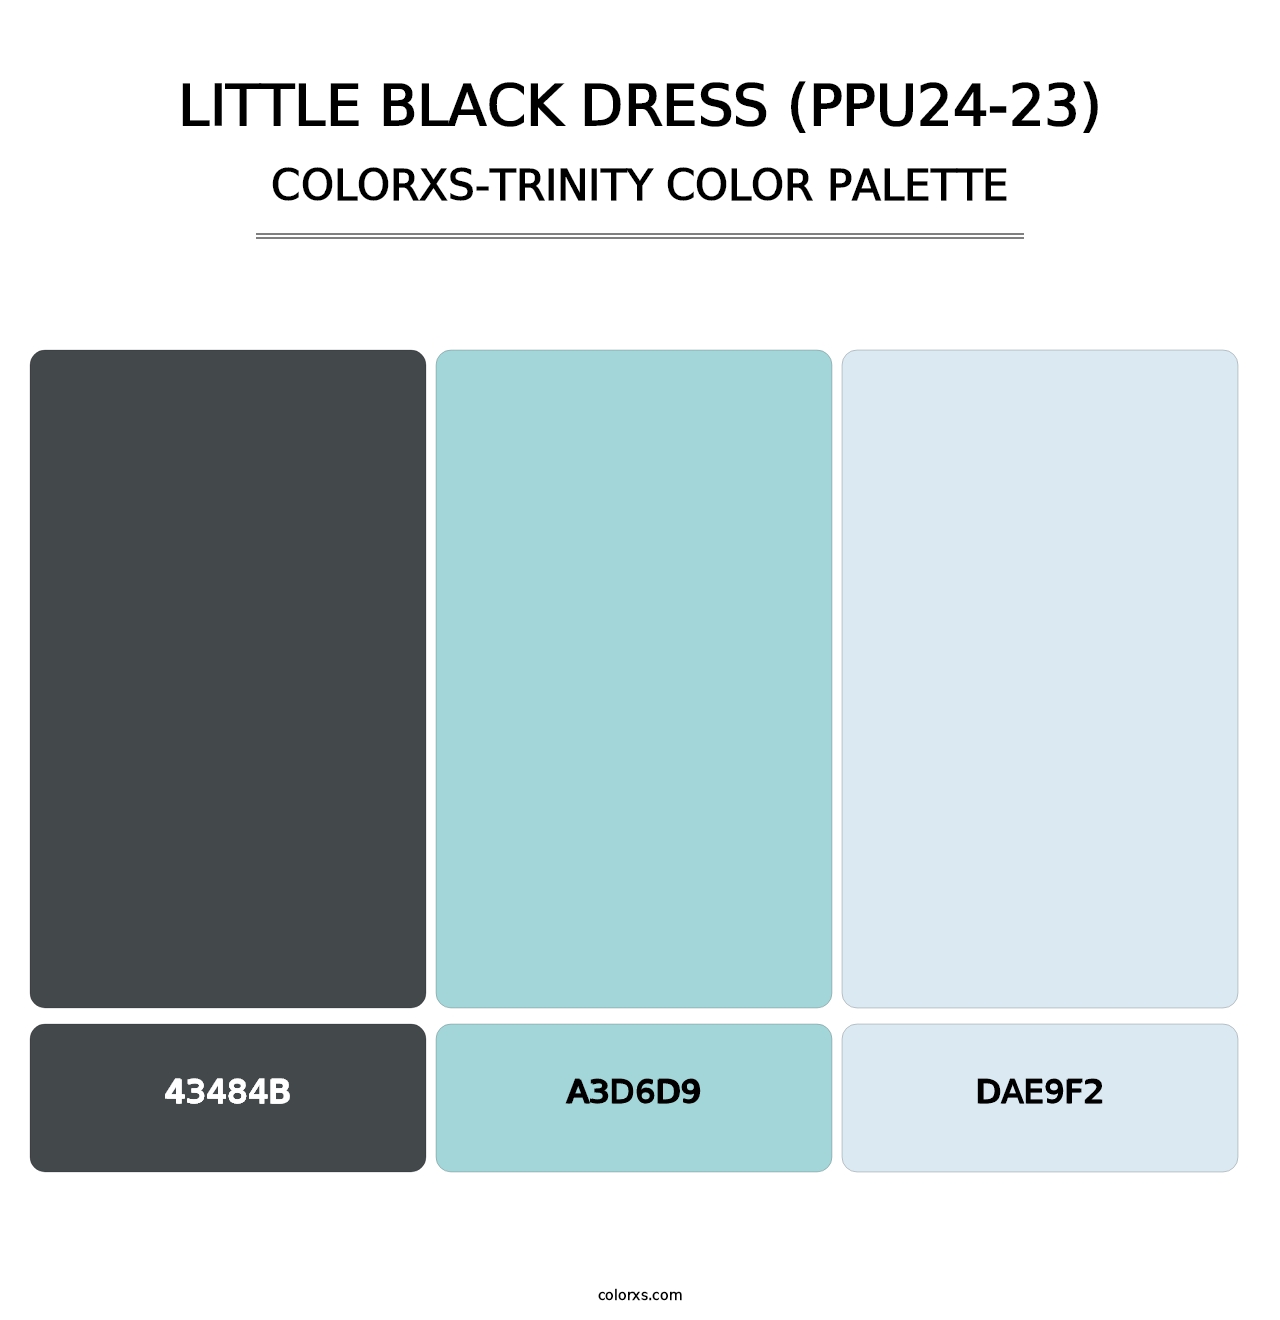 Little Black Dress (PPU24-23) - Colorxs Trinity Palette